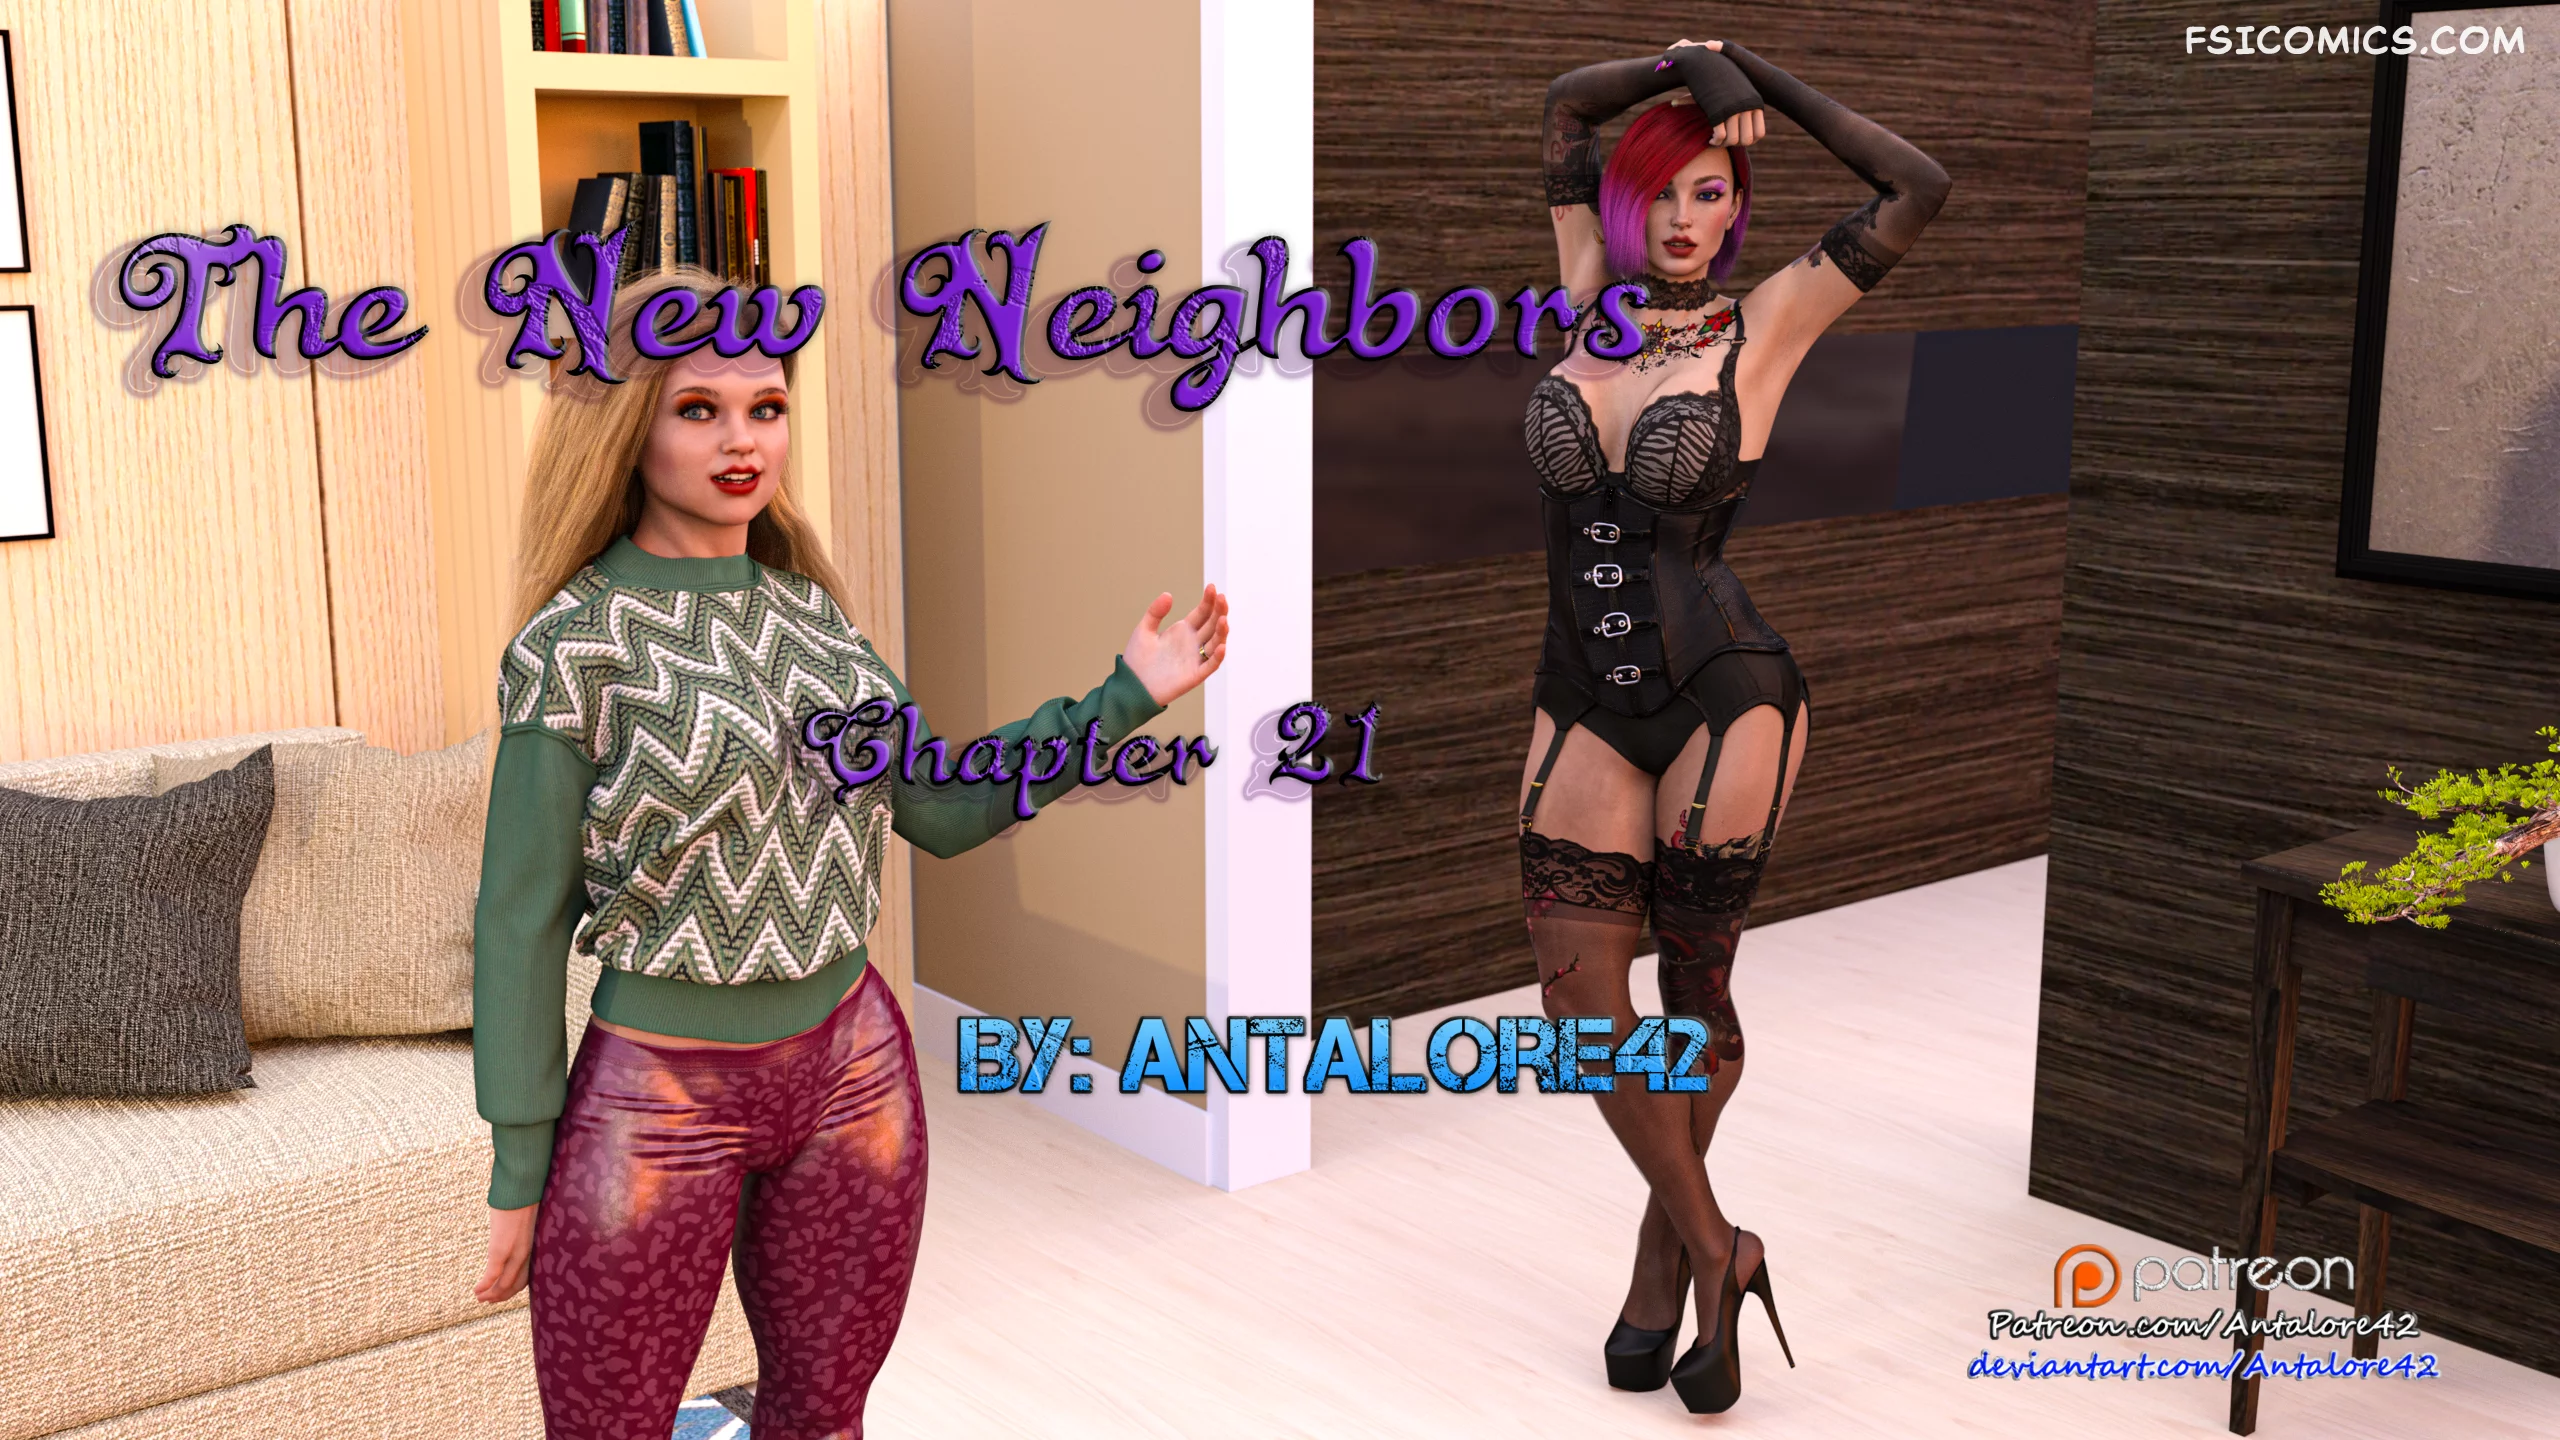 The New Neighbors Chapter 21 – Antalore42 - 47 - FSIComics